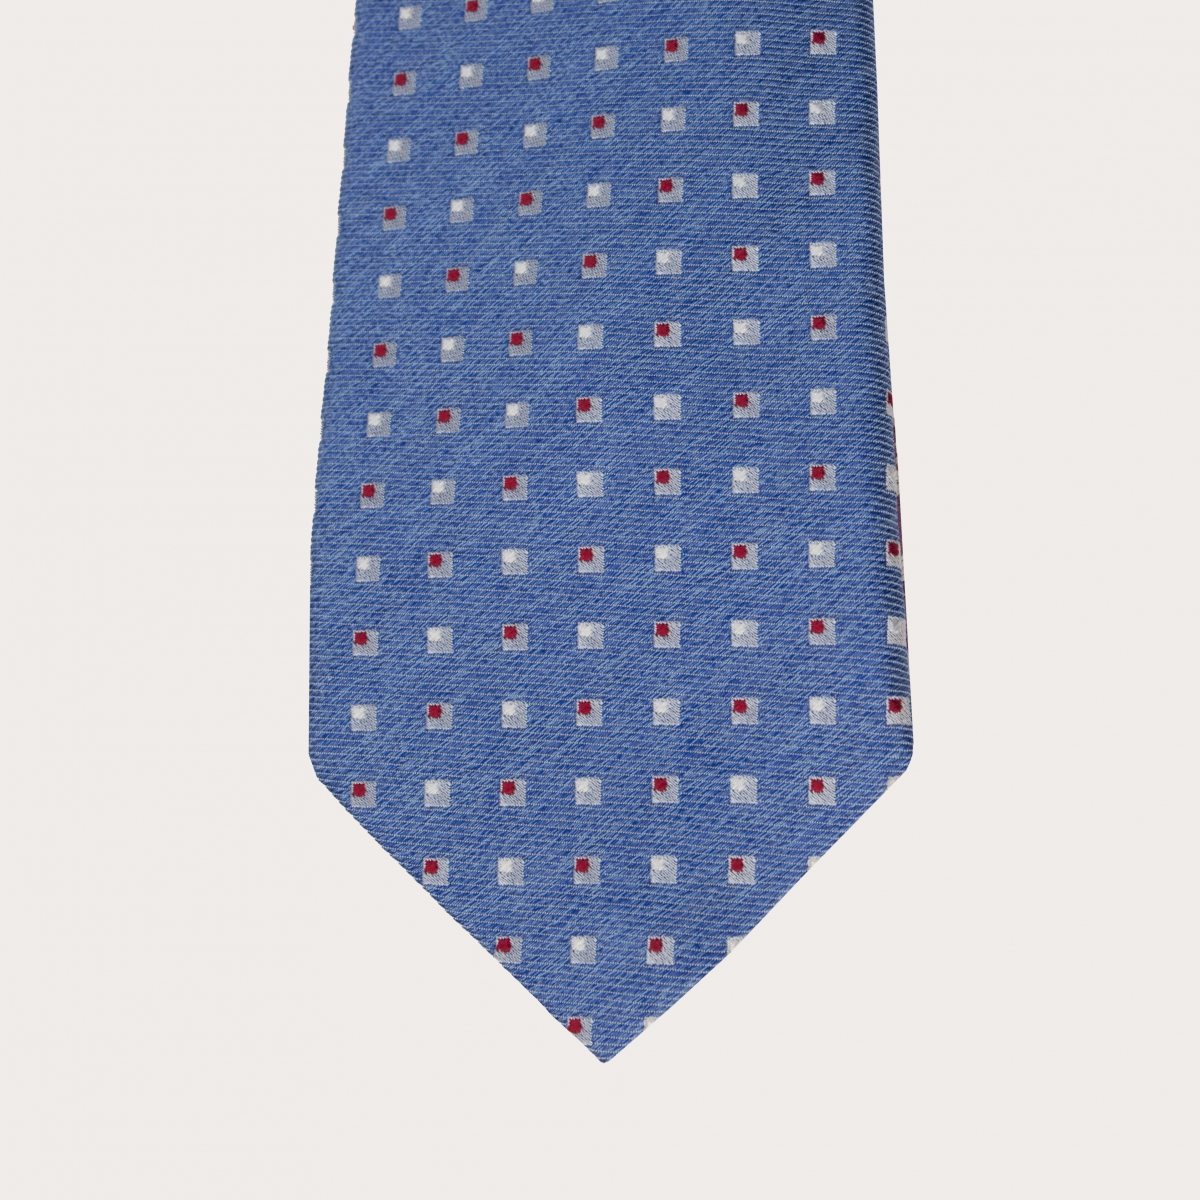 Brucle silk tie light blue geometric pattern jacquard